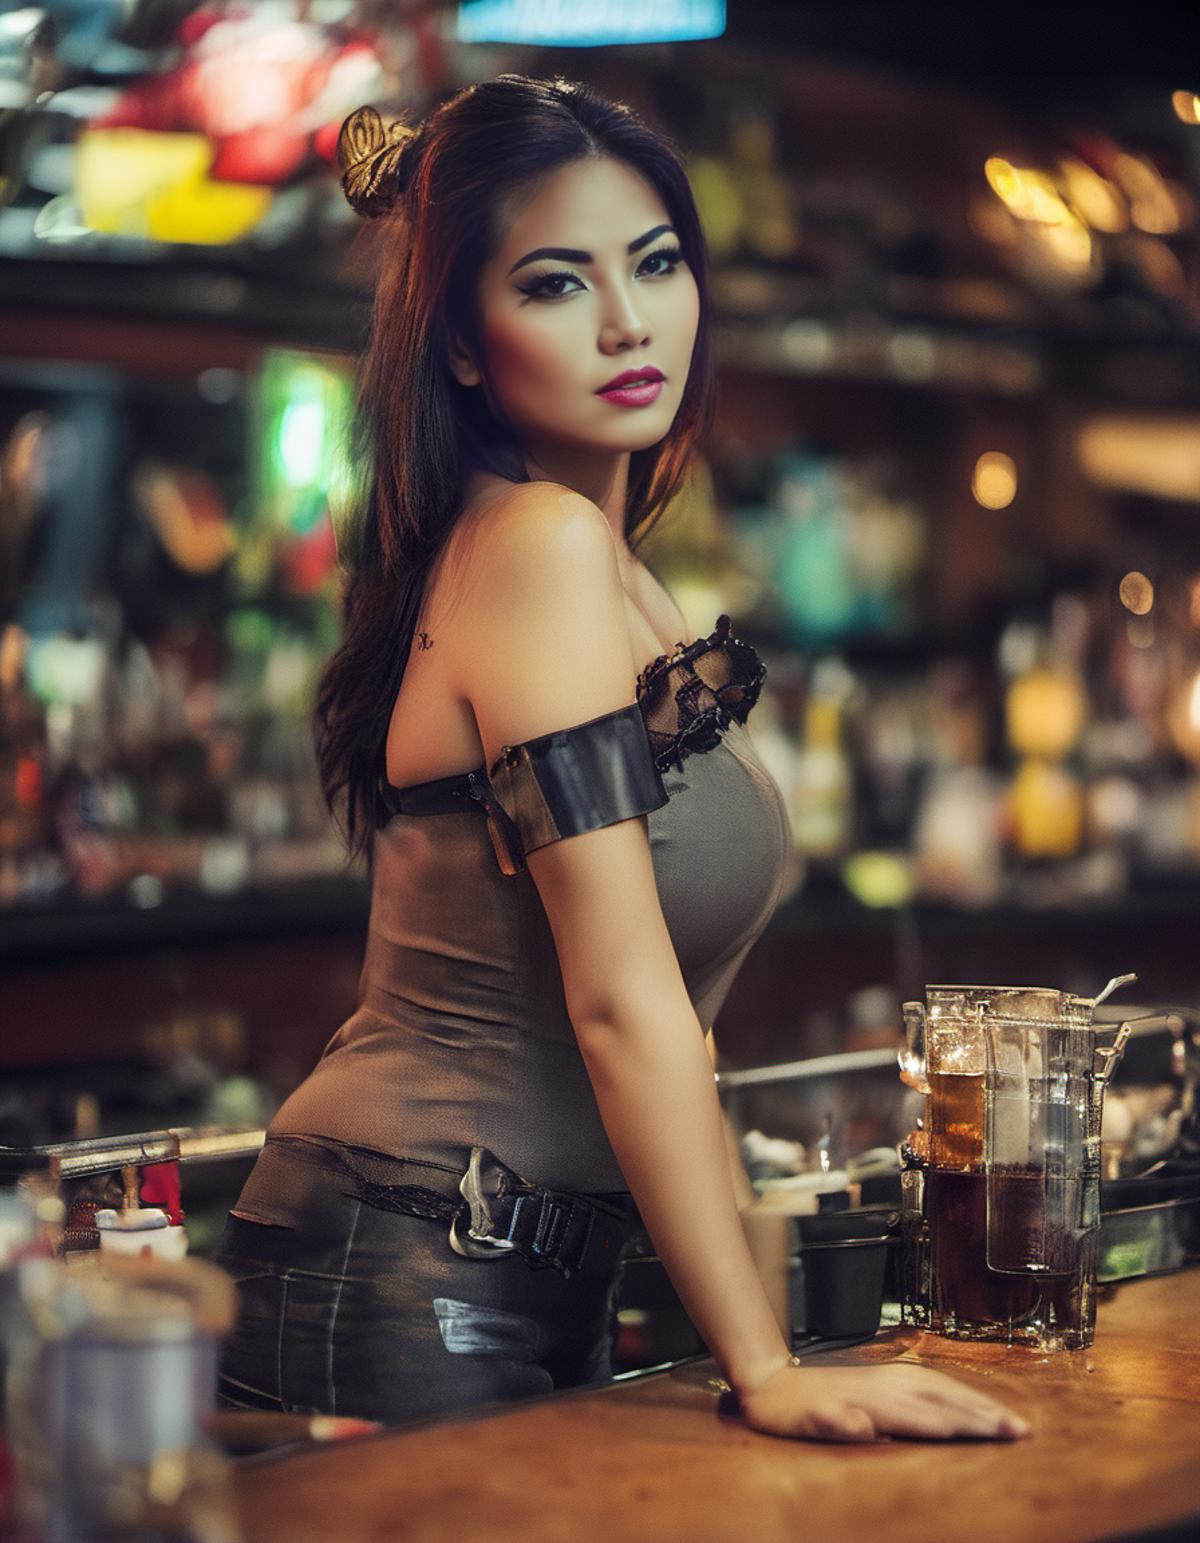 Bar girl image by Bytor1966